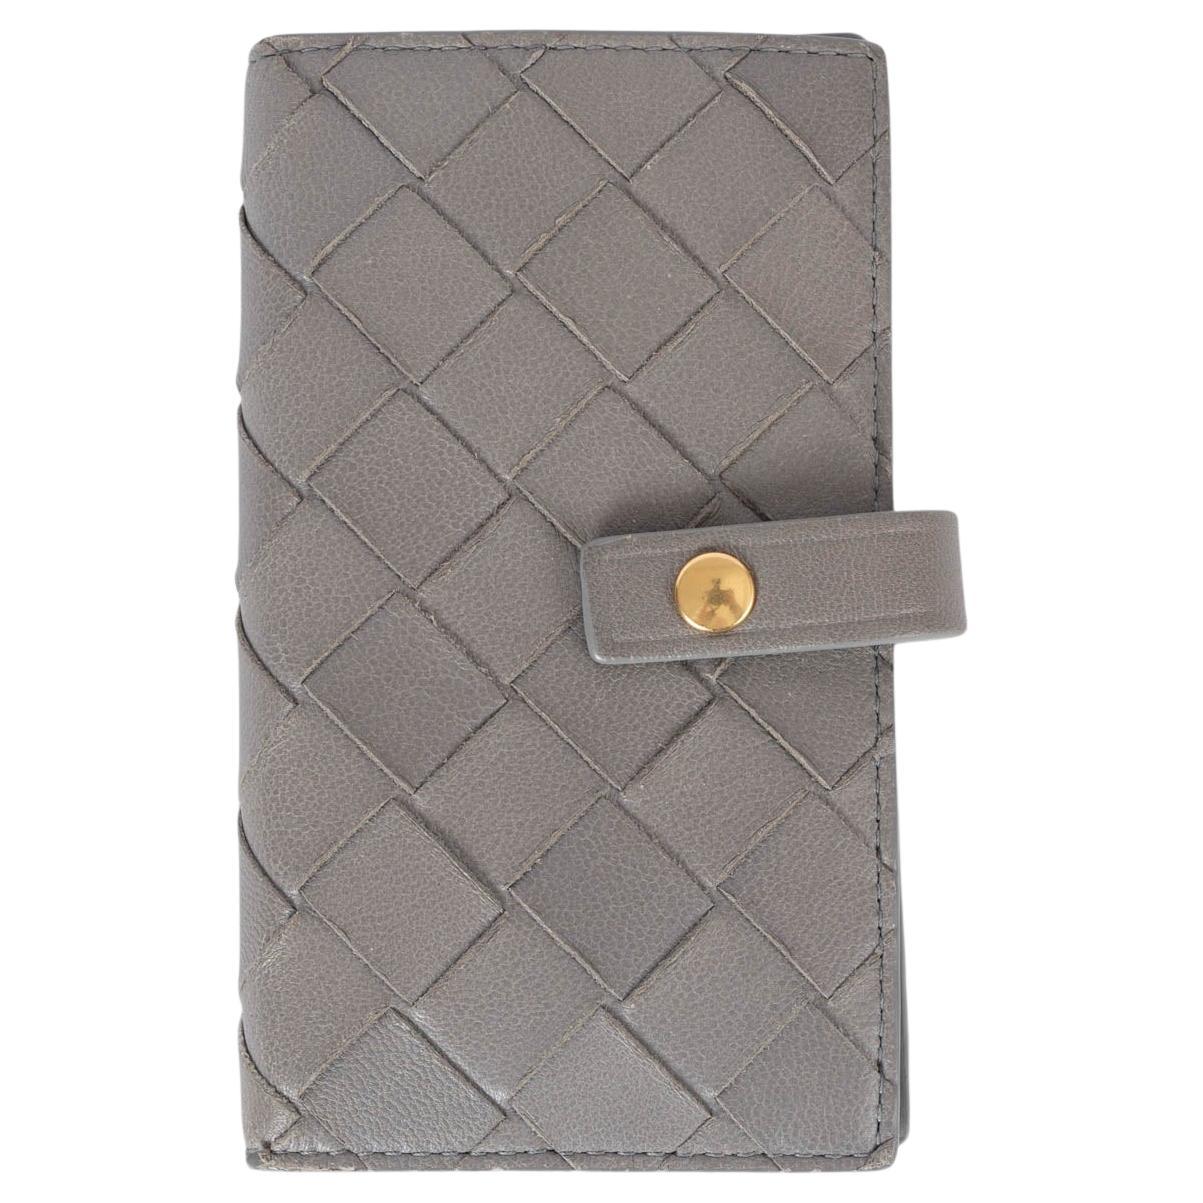 BOTTEGA VENETA grey leather INTRECCIATO KEY & CARD Wallet For Sale